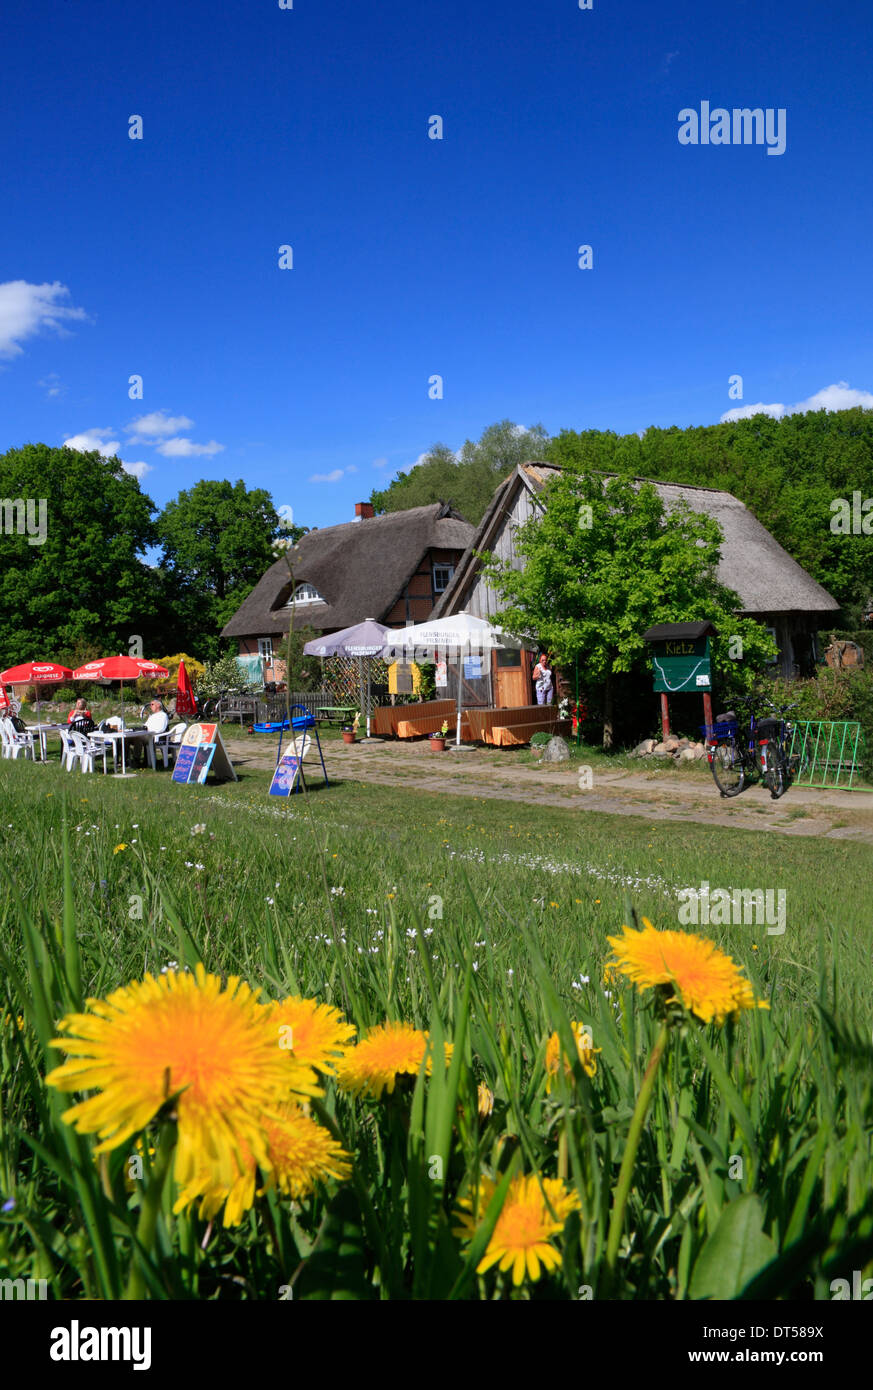 Elbe river cycle route, Cafe at Elbe dike in Kietz near Lenzen, Brandenburg, Germany, Europe Stock Photo